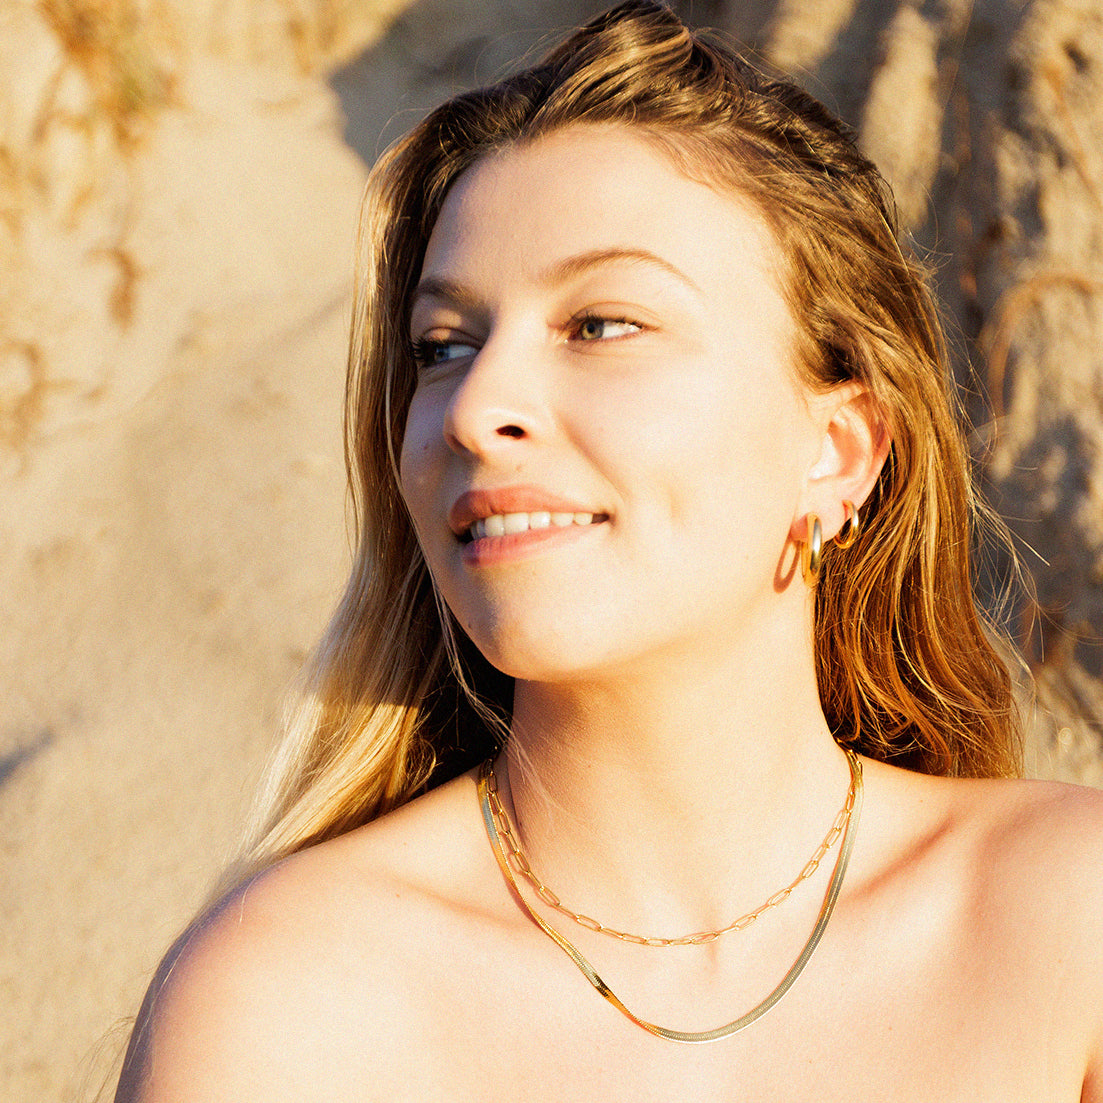 Beach girl wearing waterproof gold jewellery and earrings